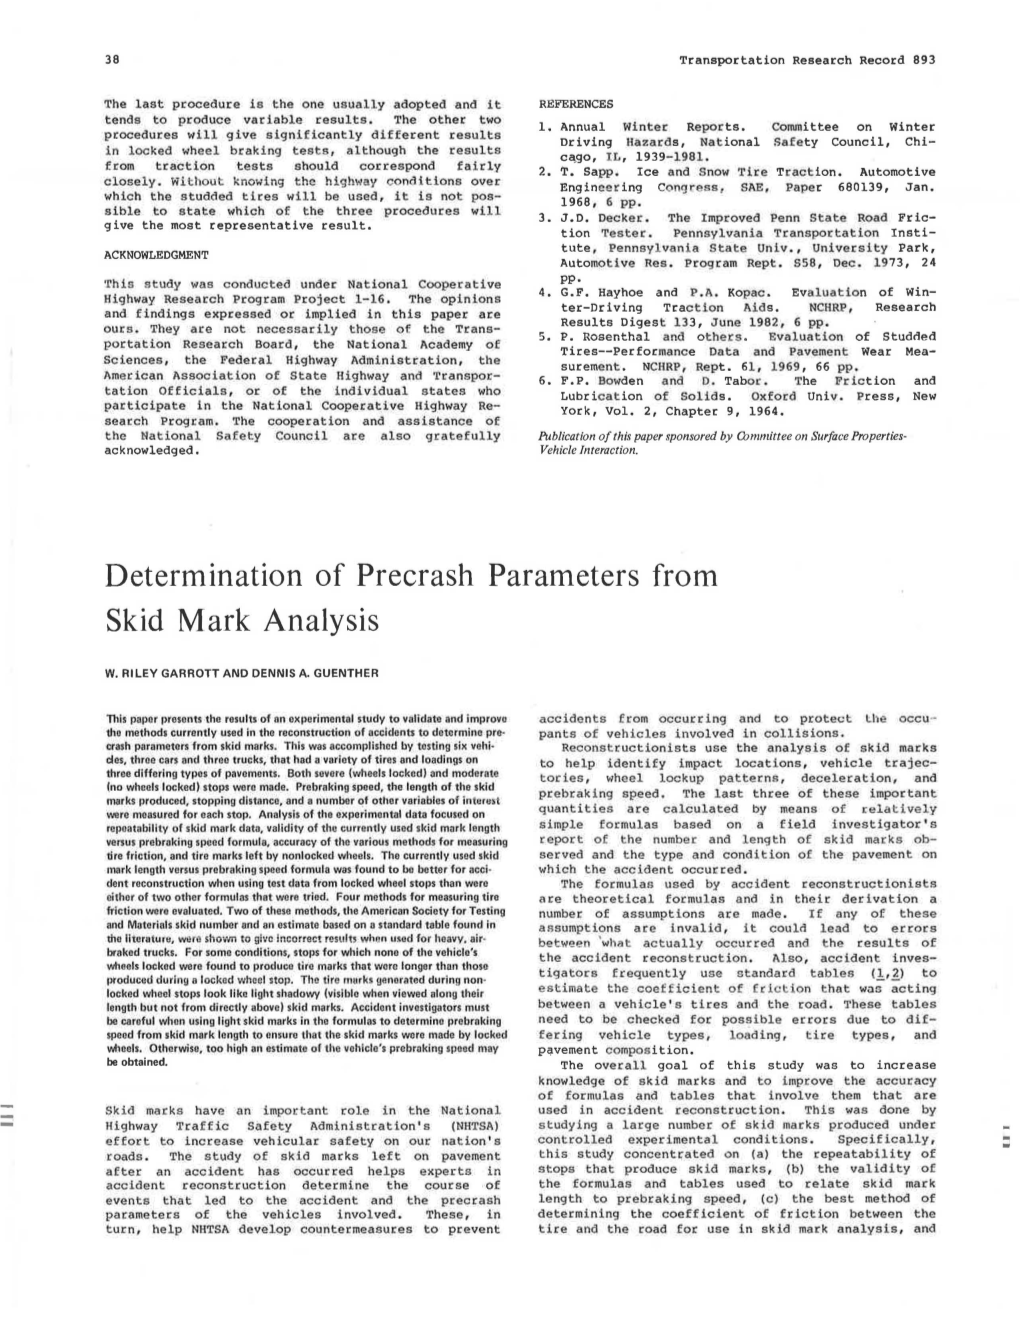 Determination of Precrash Parameters from Skid Mark Analysis